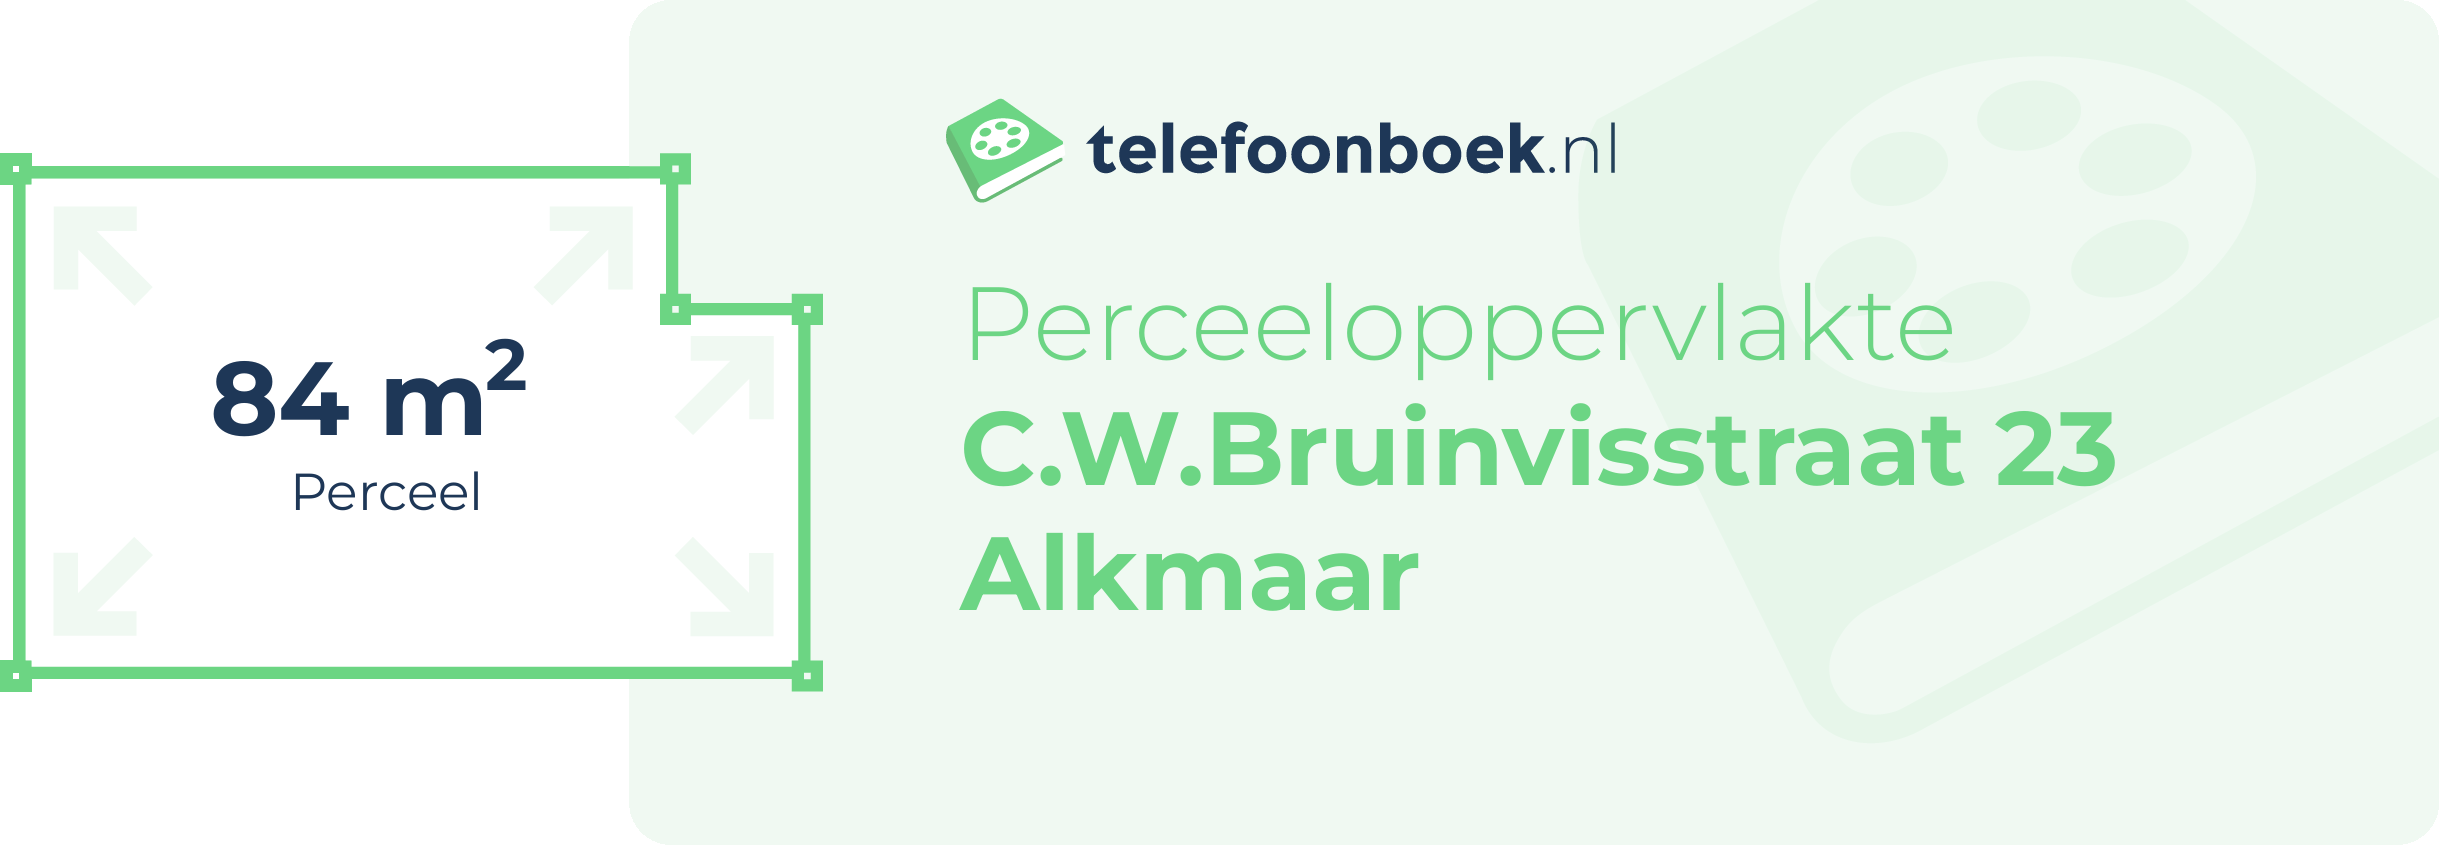 Perceeloppervlakte C.W.Bruinvisstraat 23 Alkmaar